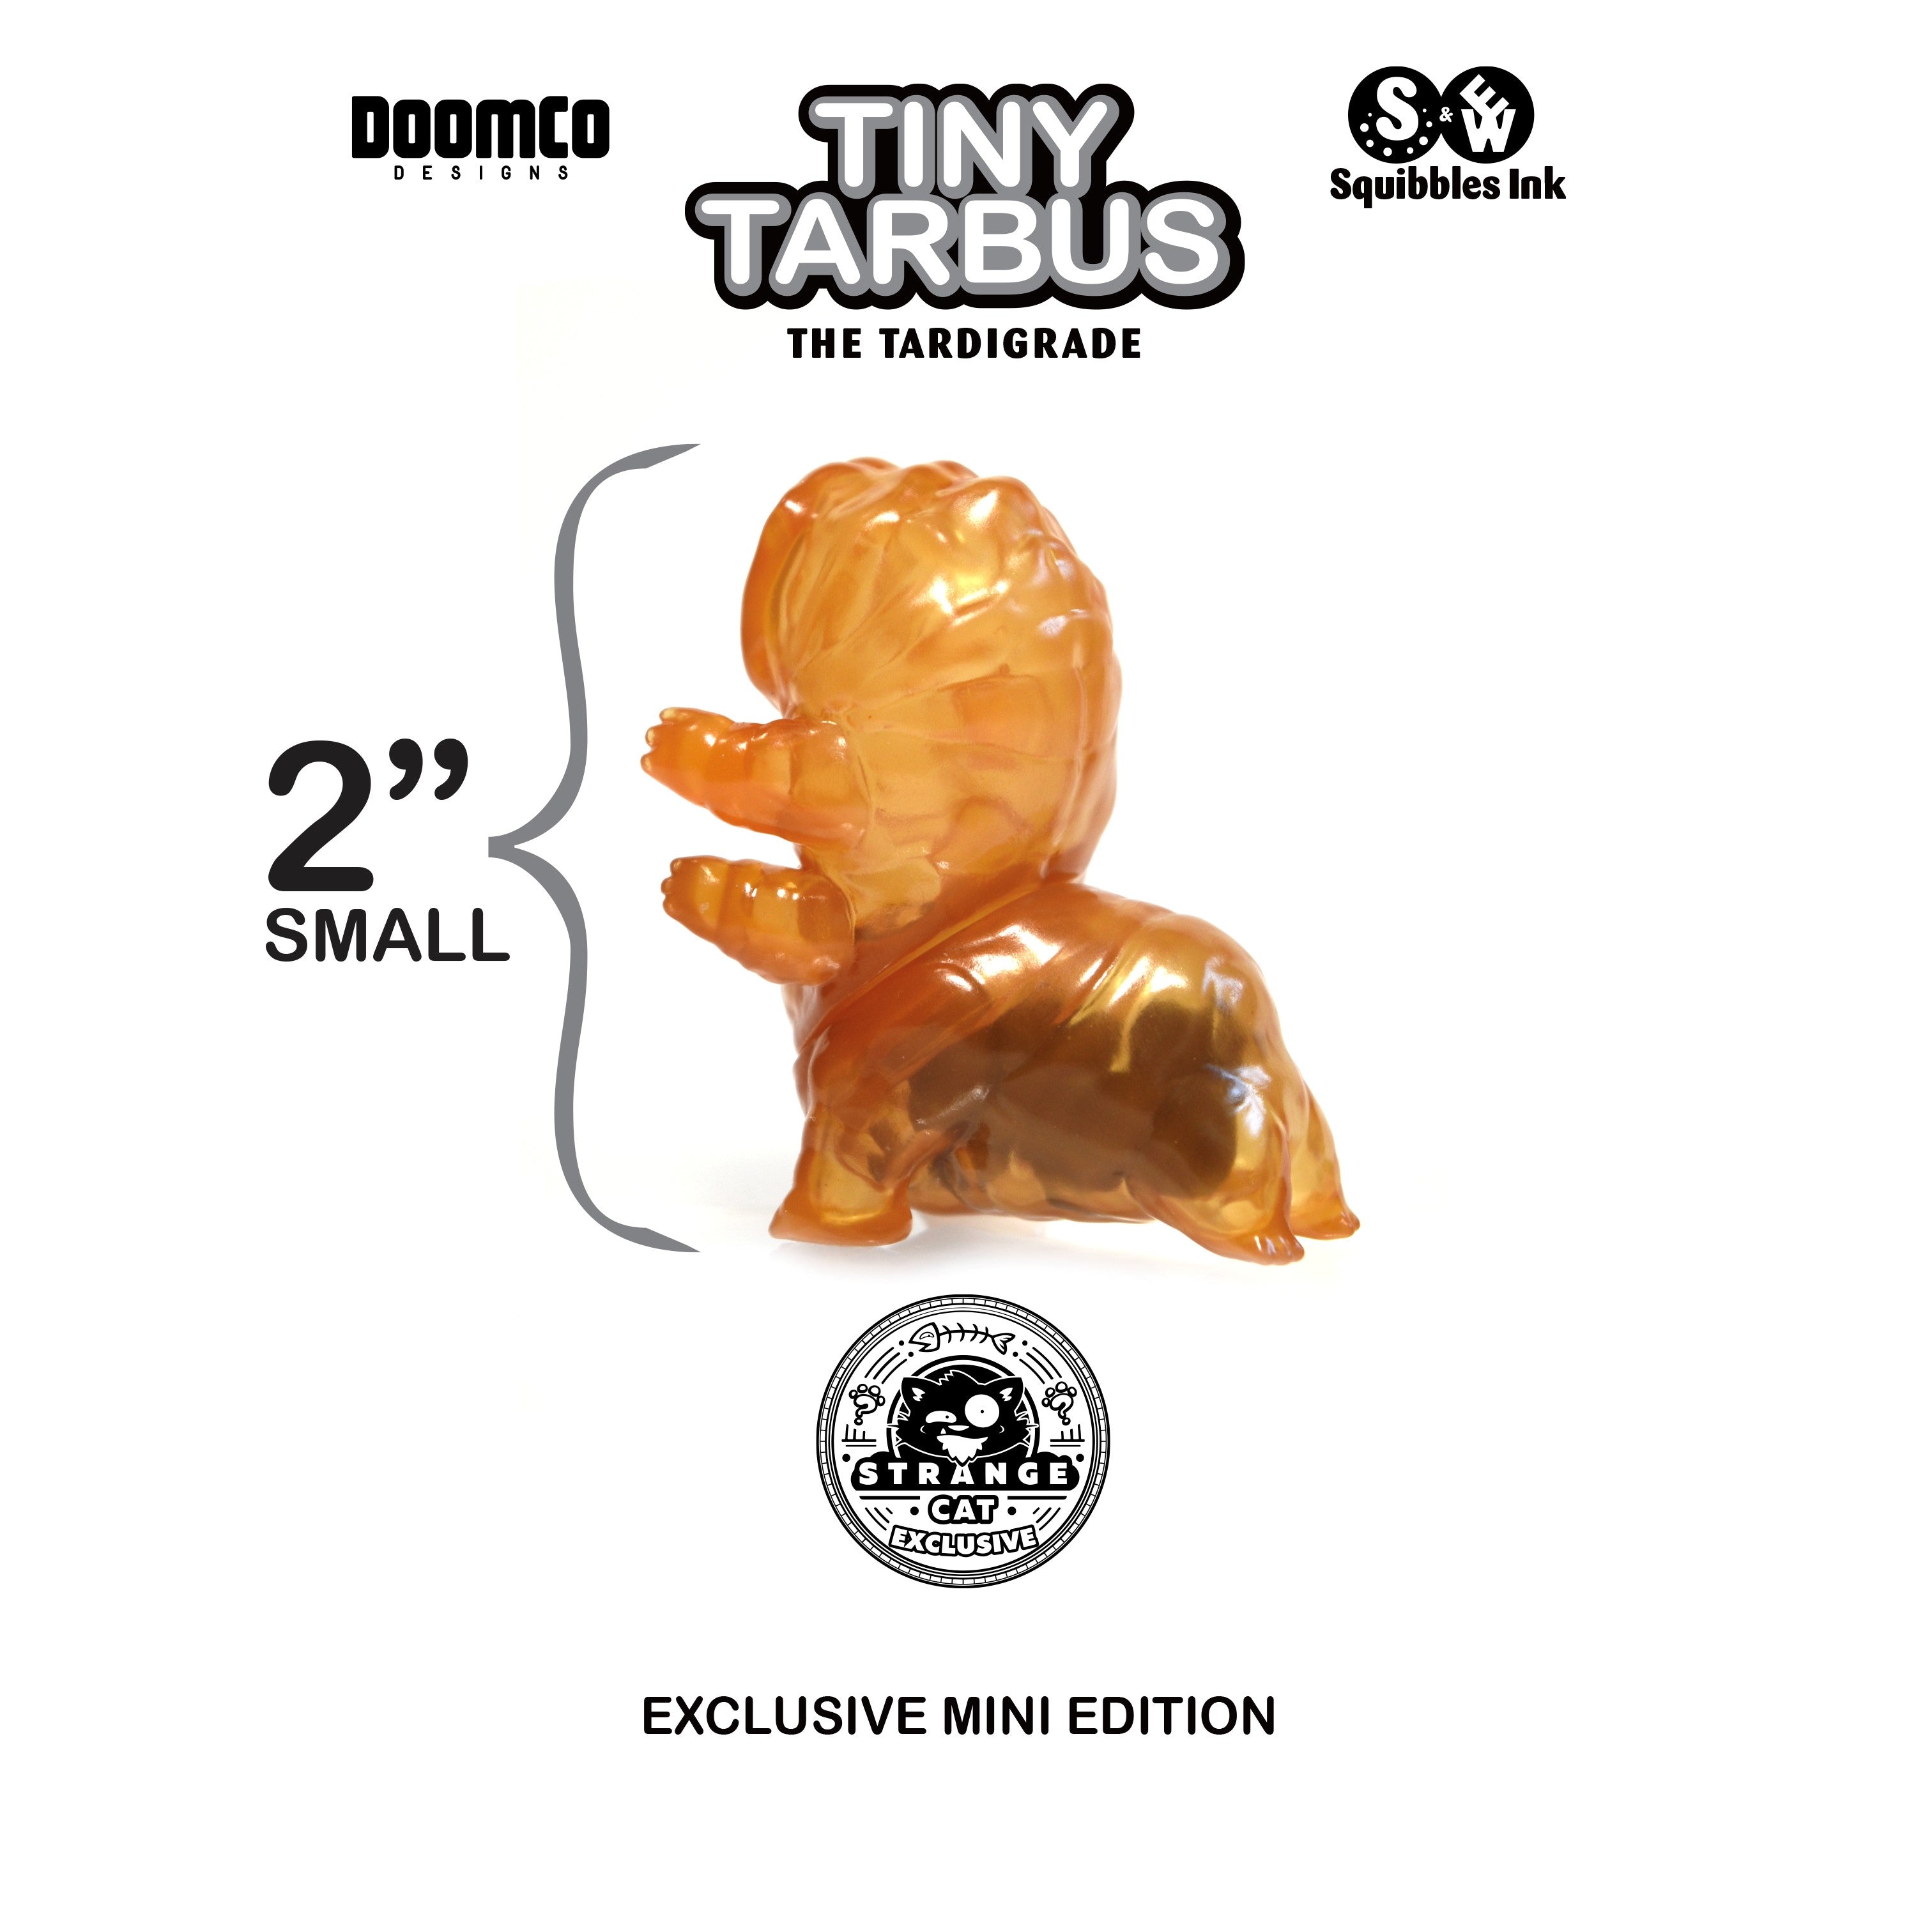 Tiny Tarbus - Bubble Tea edition by DoomCo